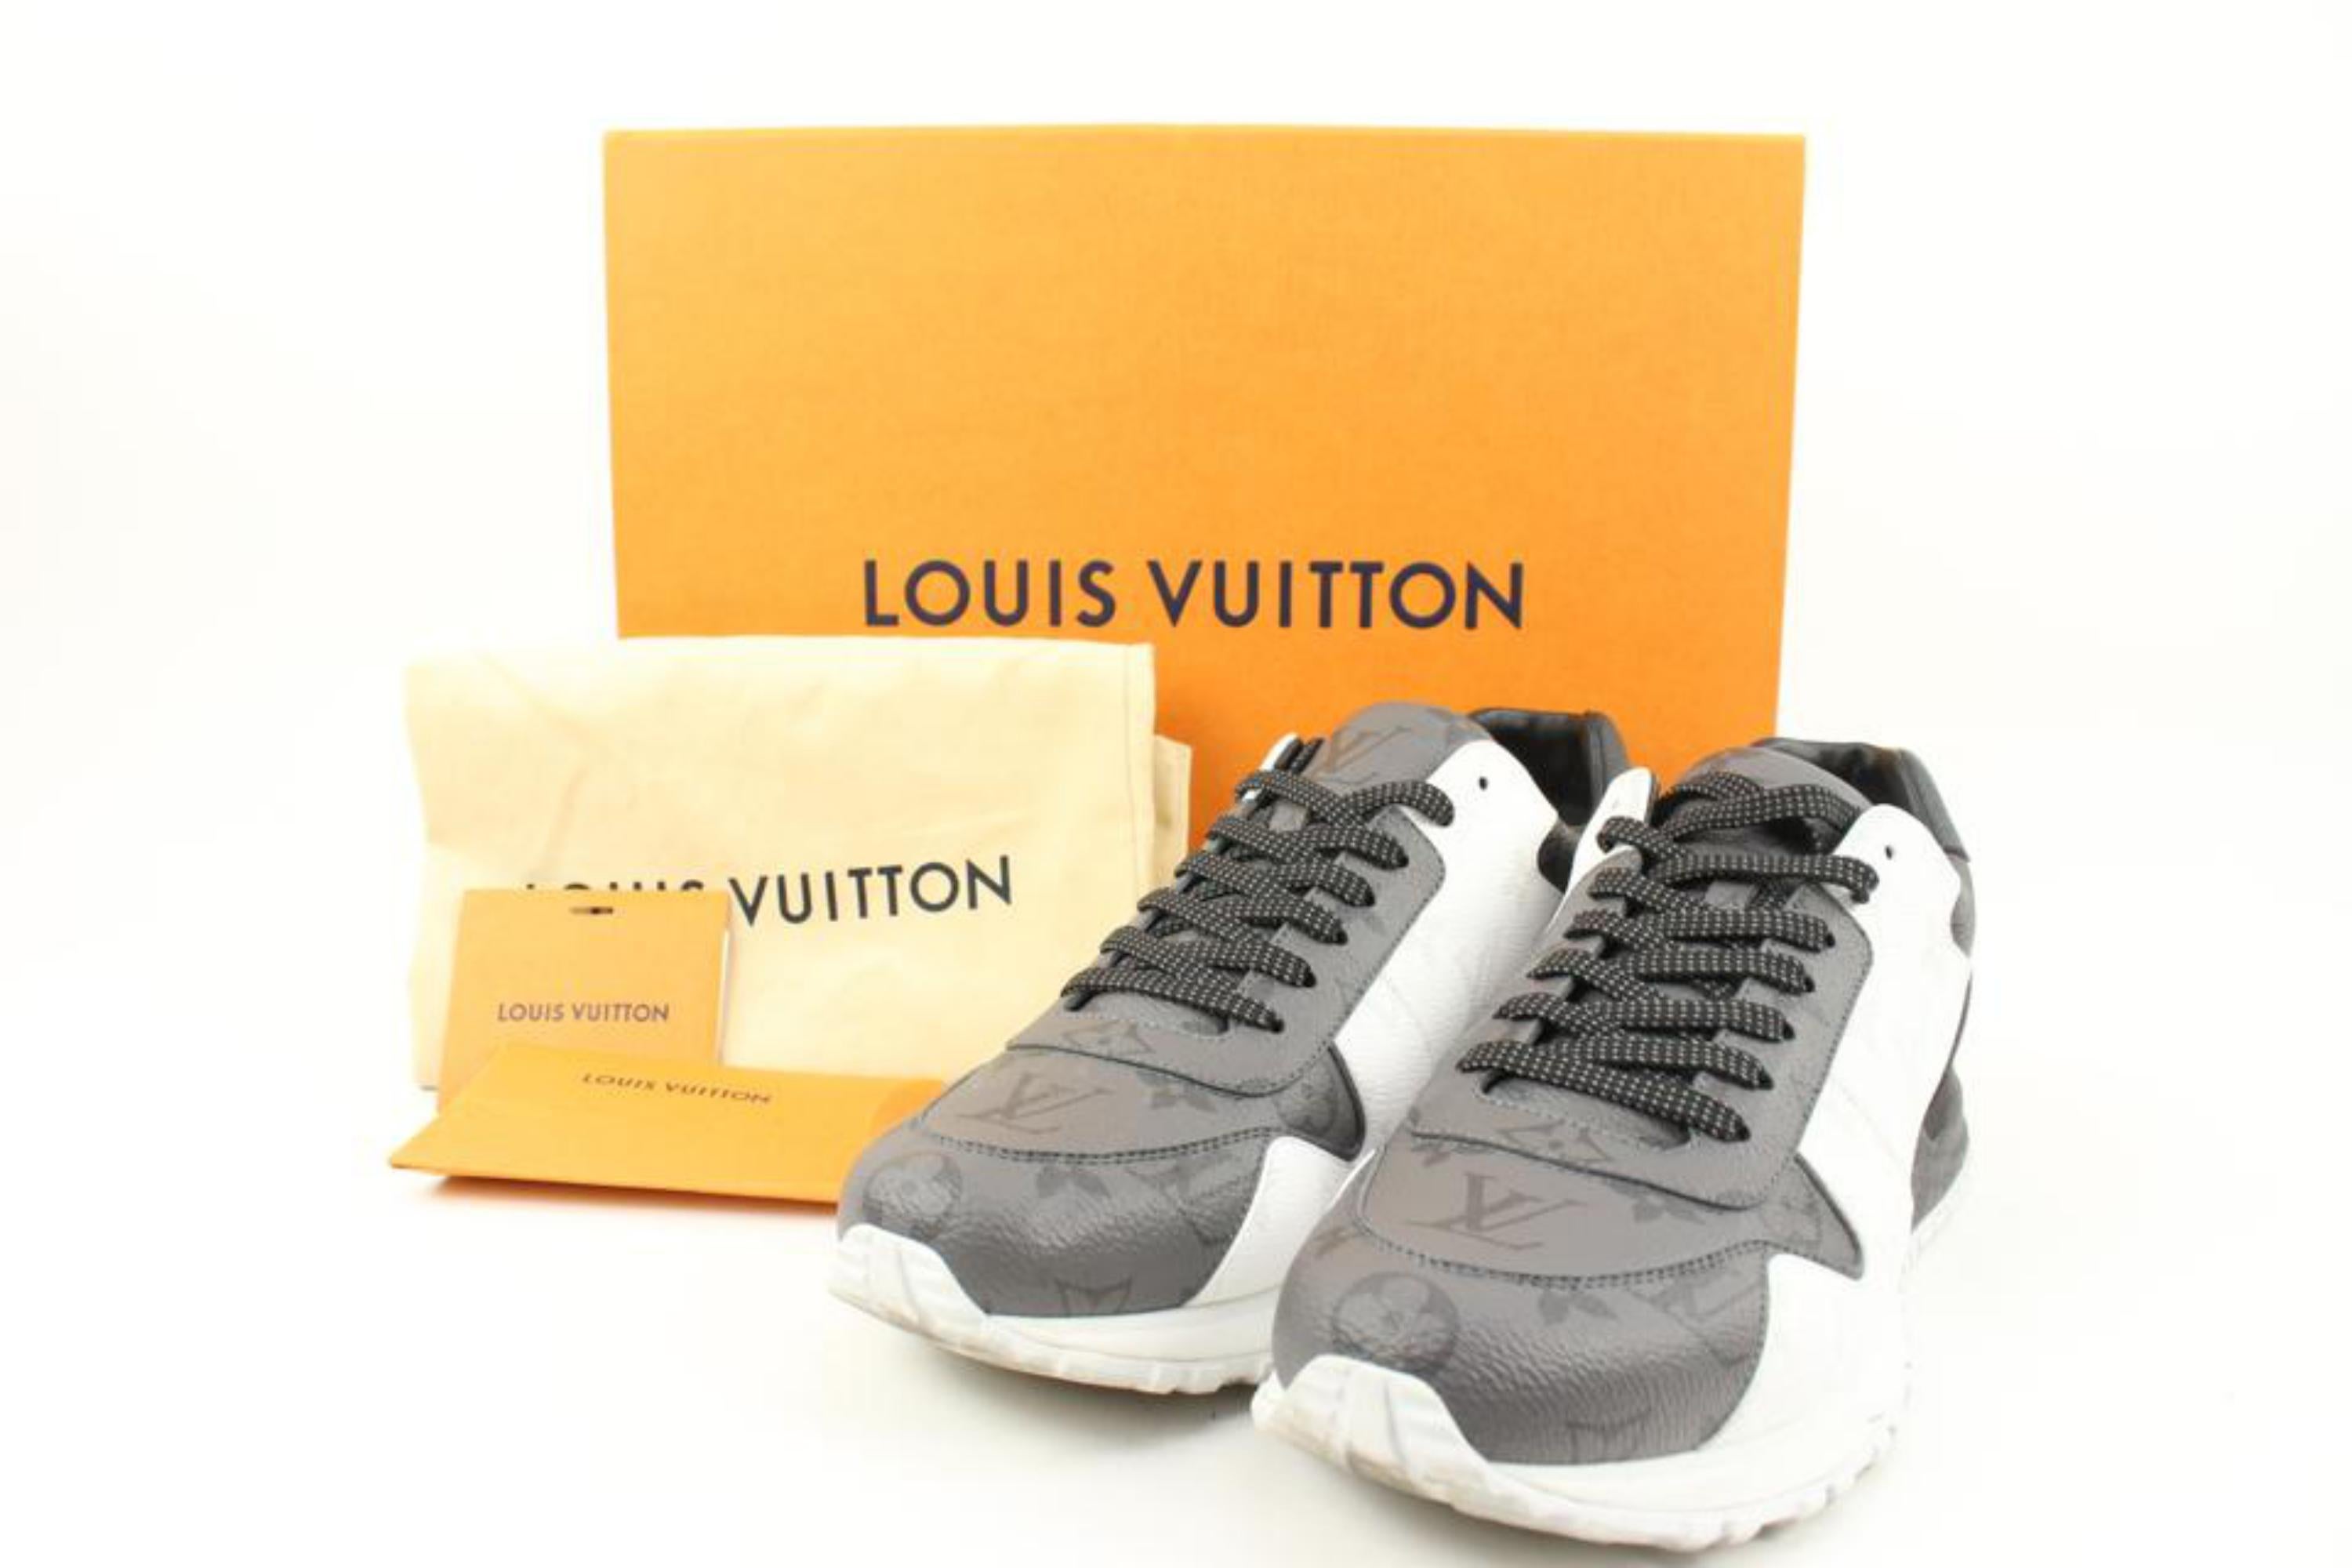 Louis Vuitton Red Bordeaux Yellow Trainer Sneaker - Size LV 9.5